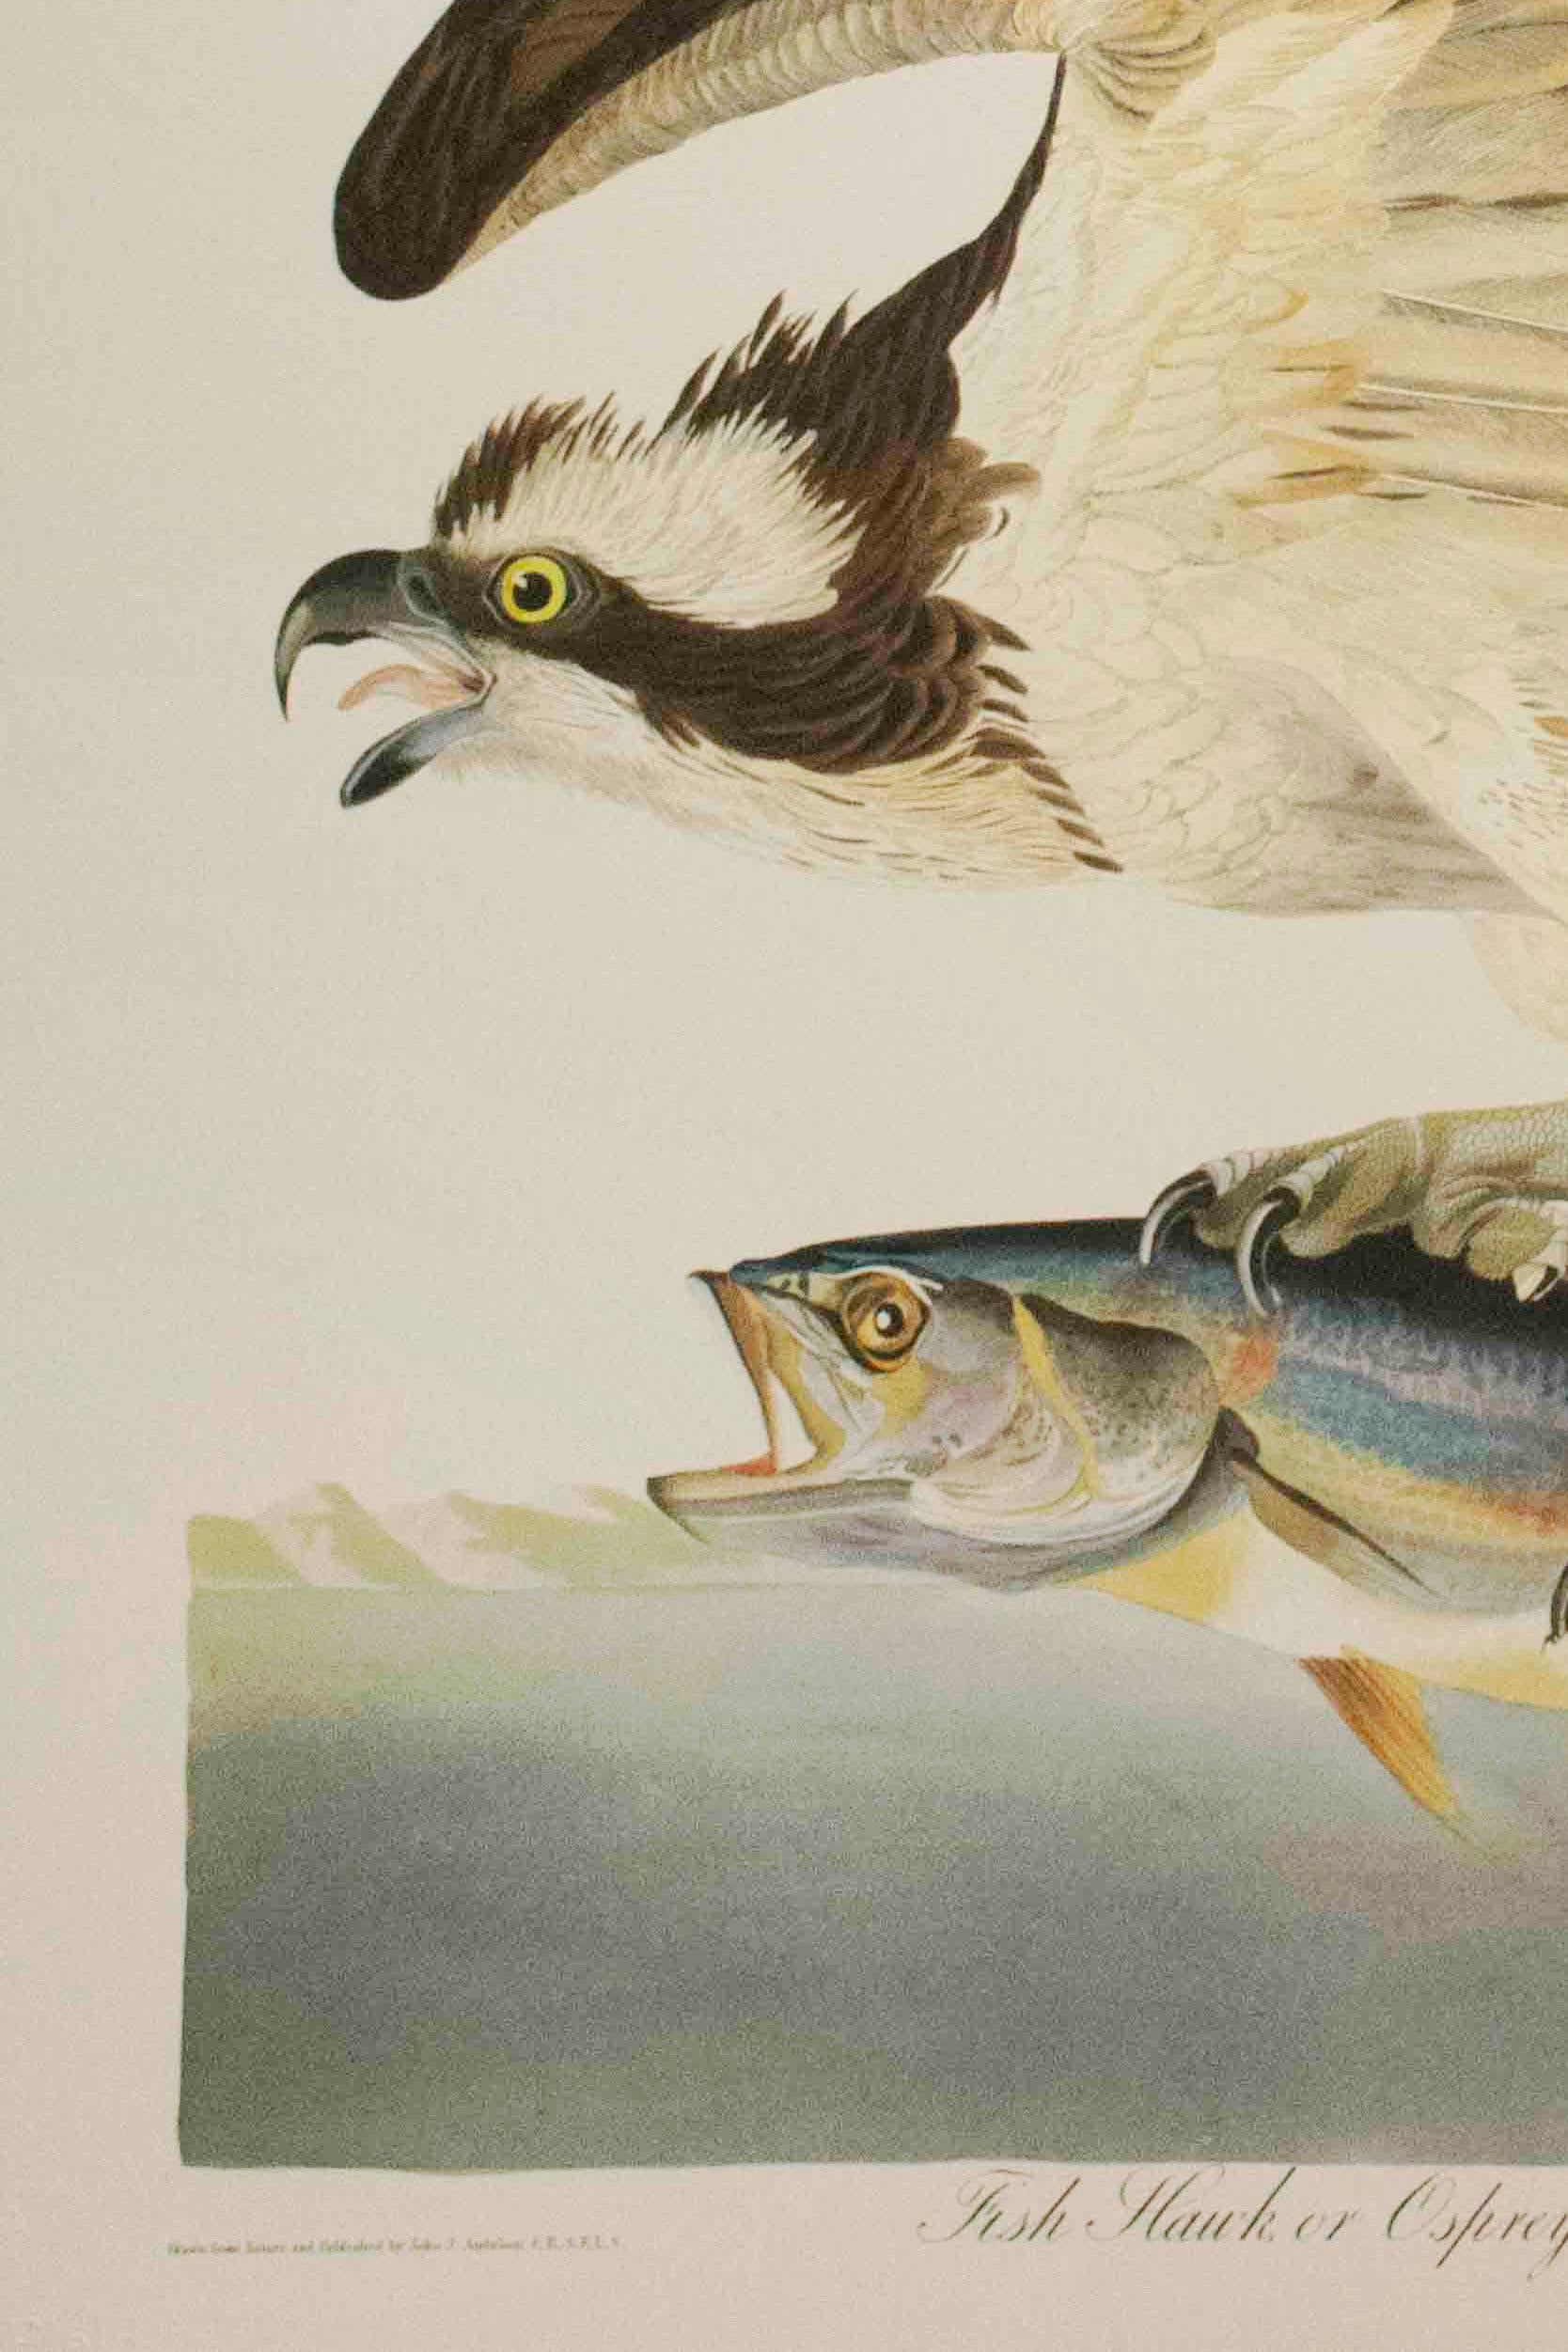 Fish Hawk, or Osprey, Edition Pl. 81 - Naturalistic Print by After John James Audubon